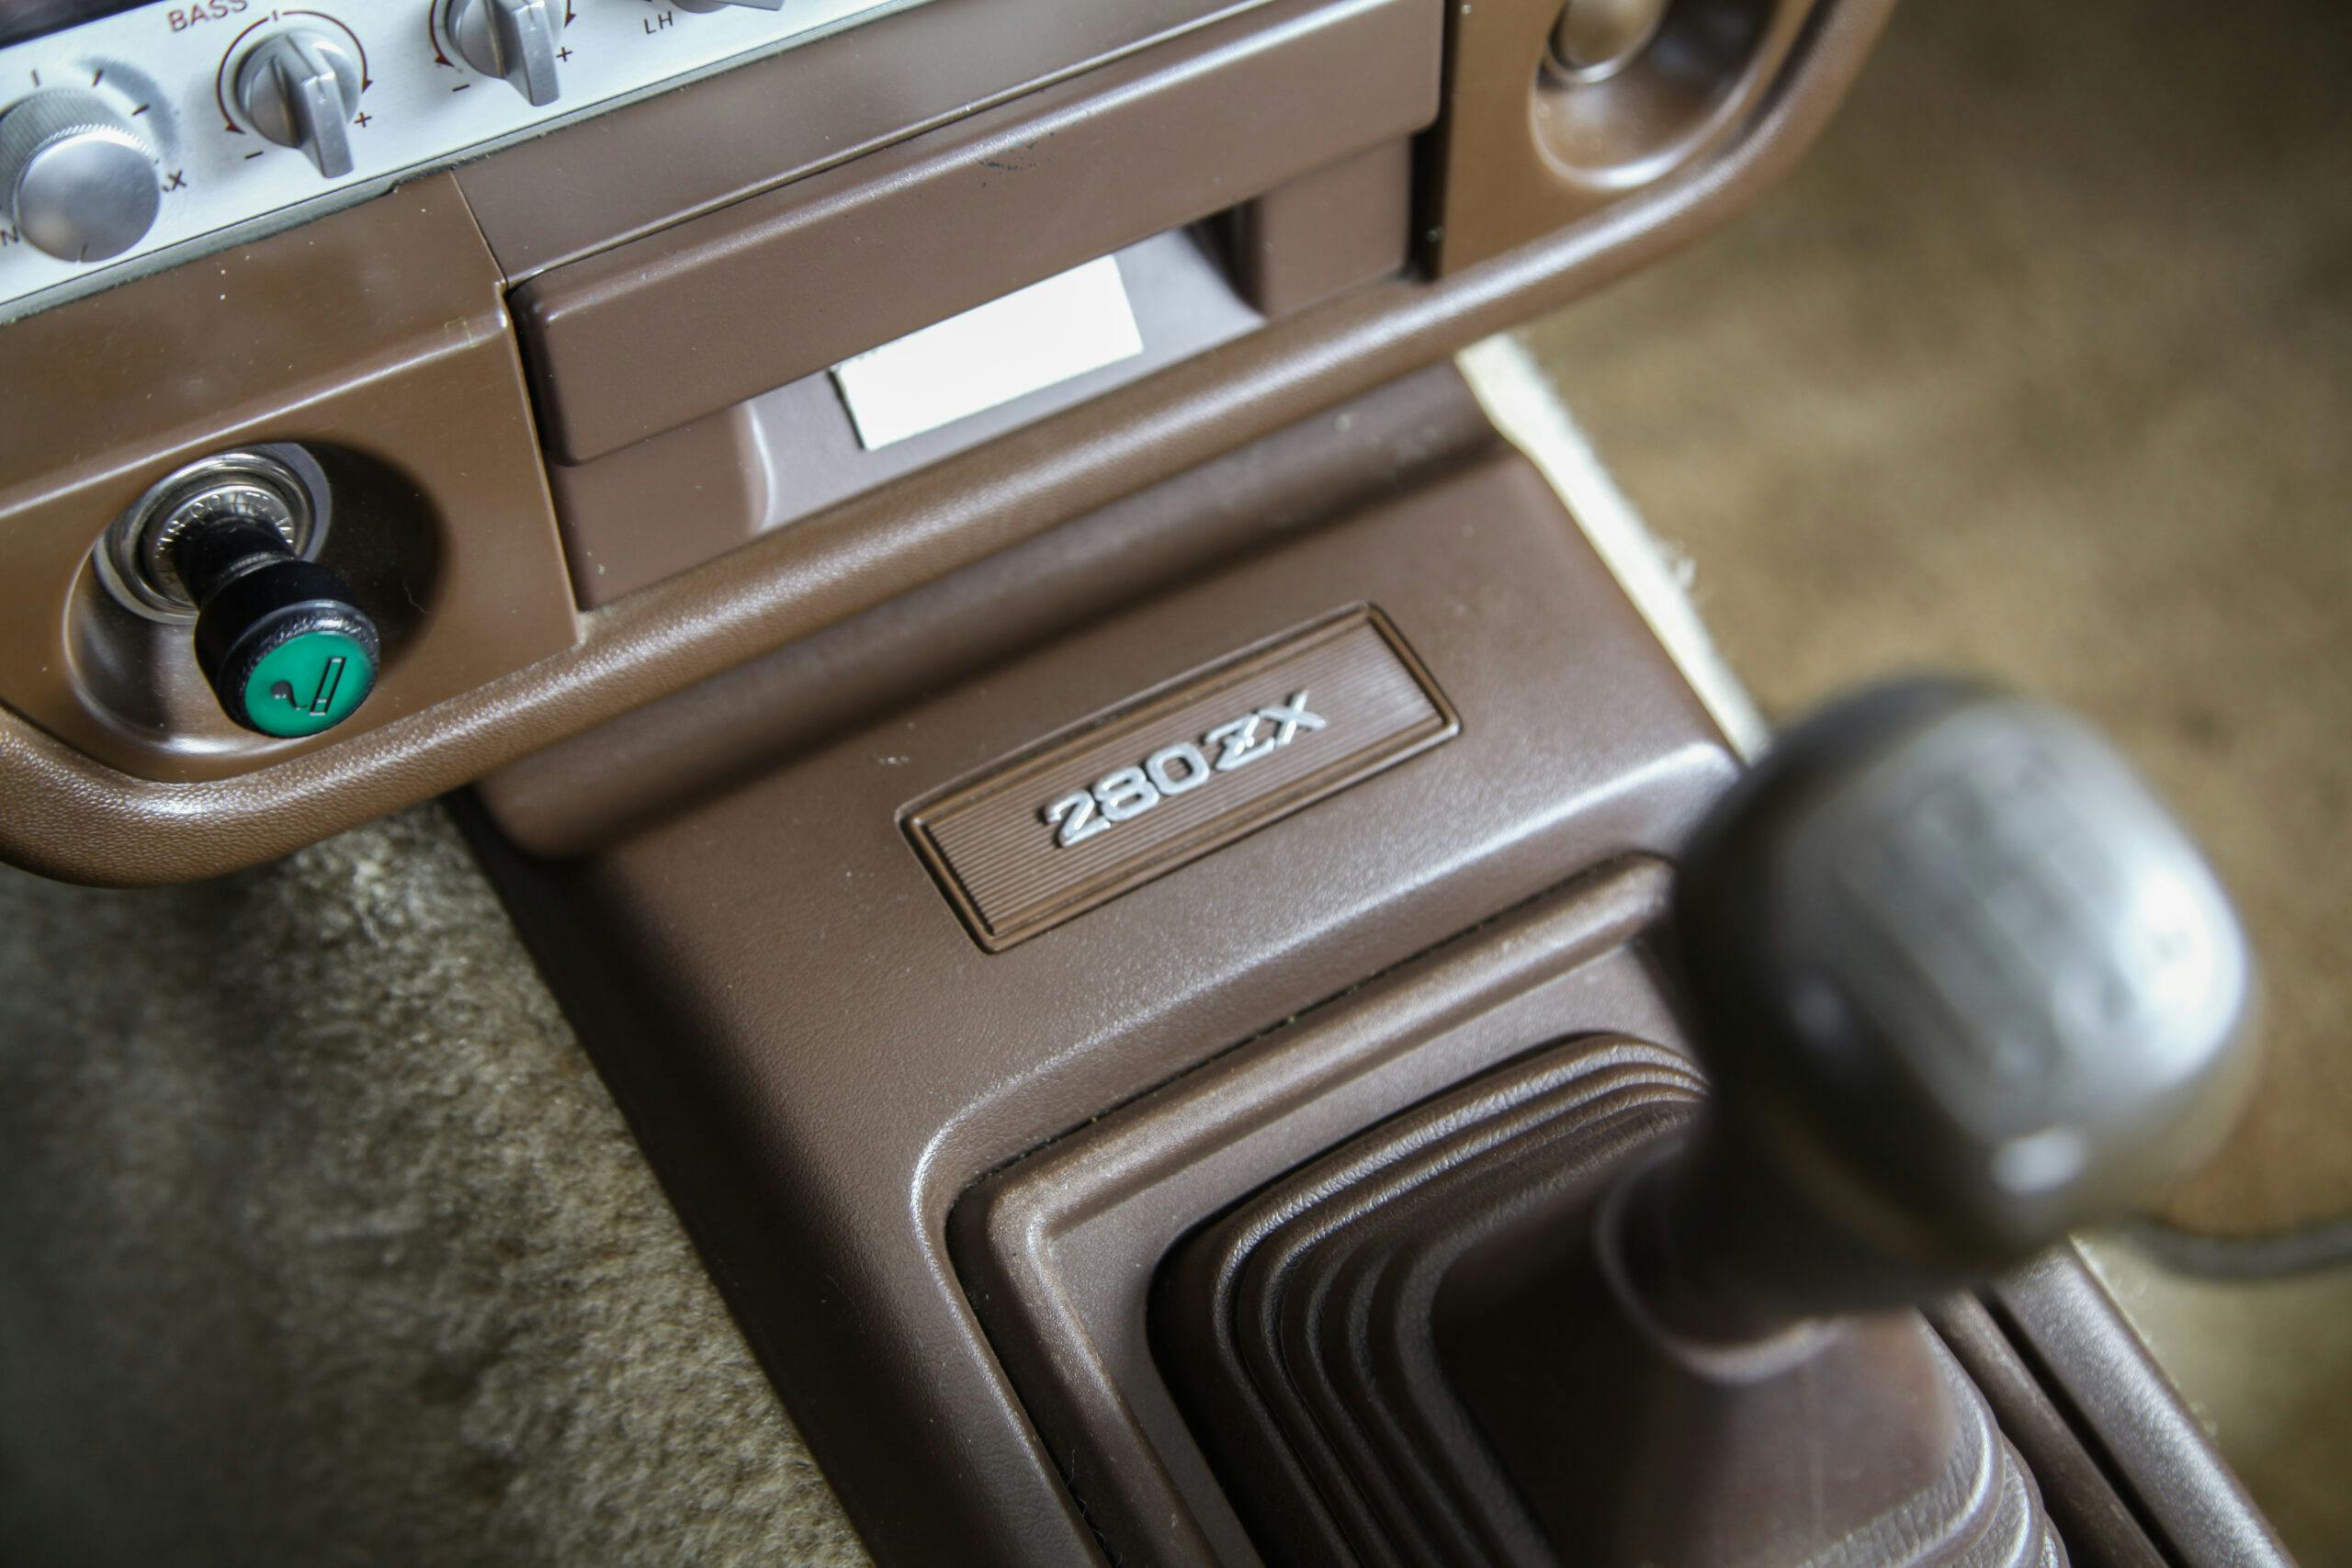 1981 Datsun 280ZX interior badge